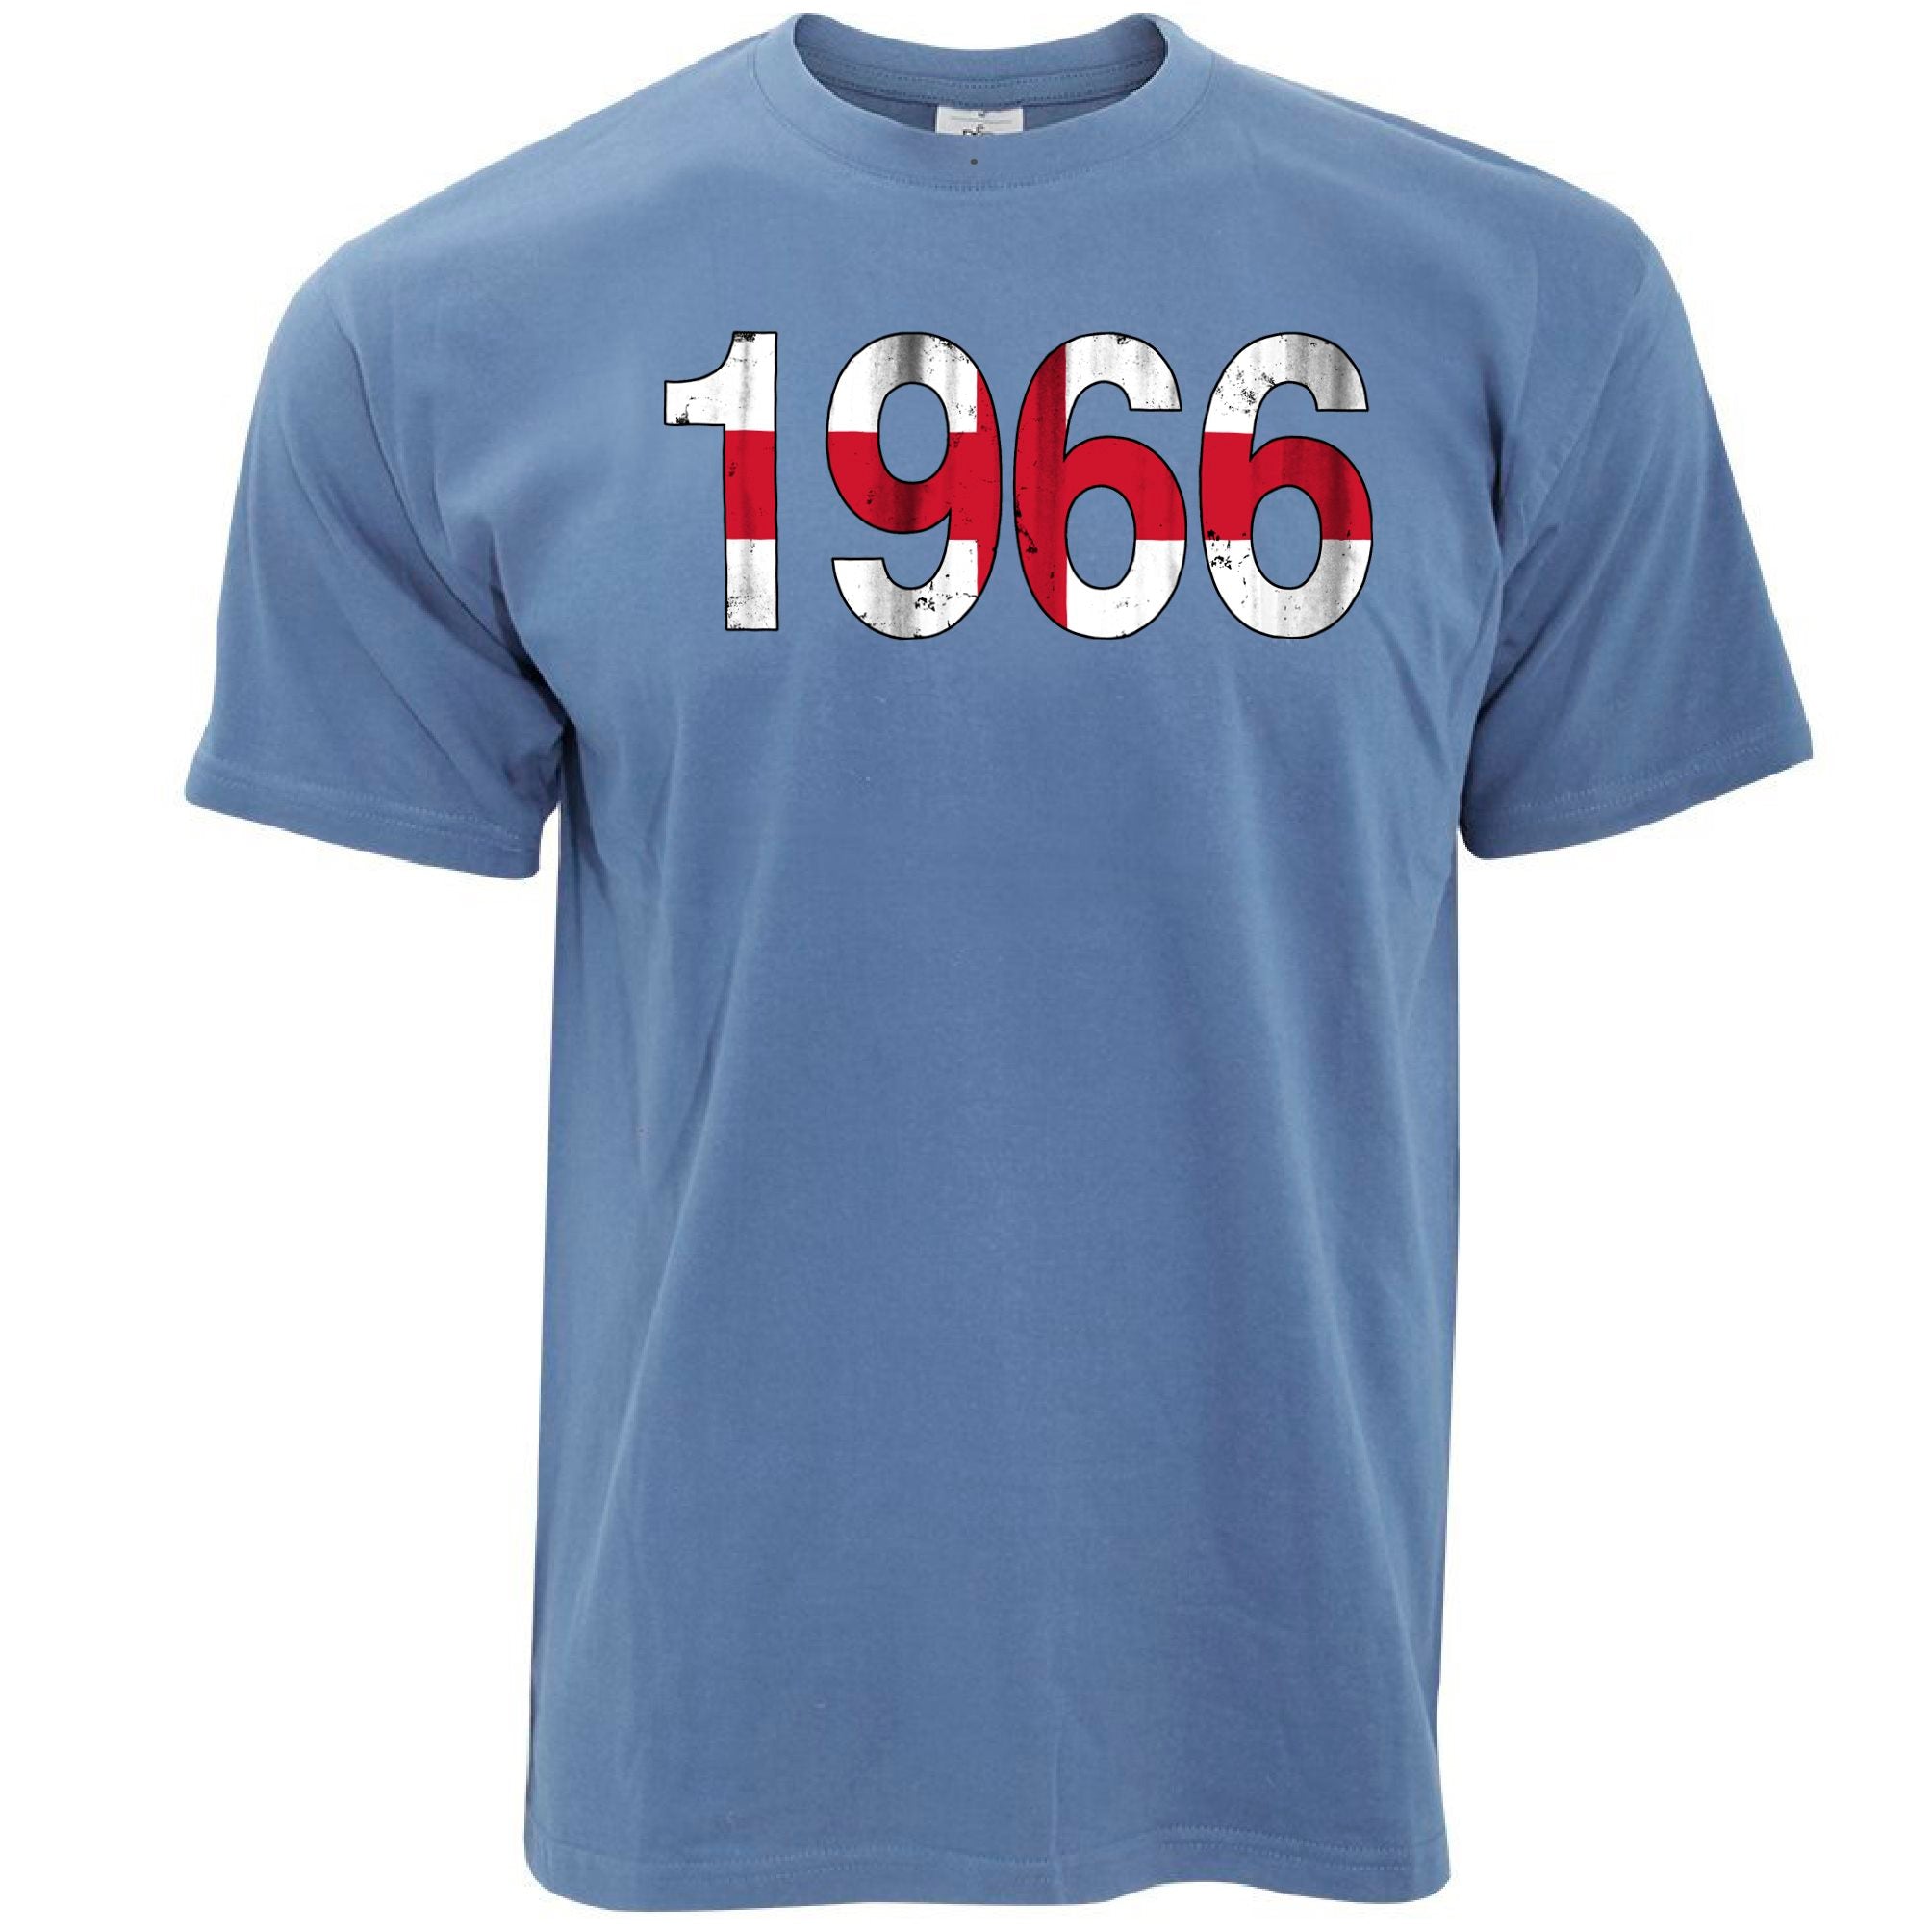 1966 England Flag T Shirt Football Team Supporters